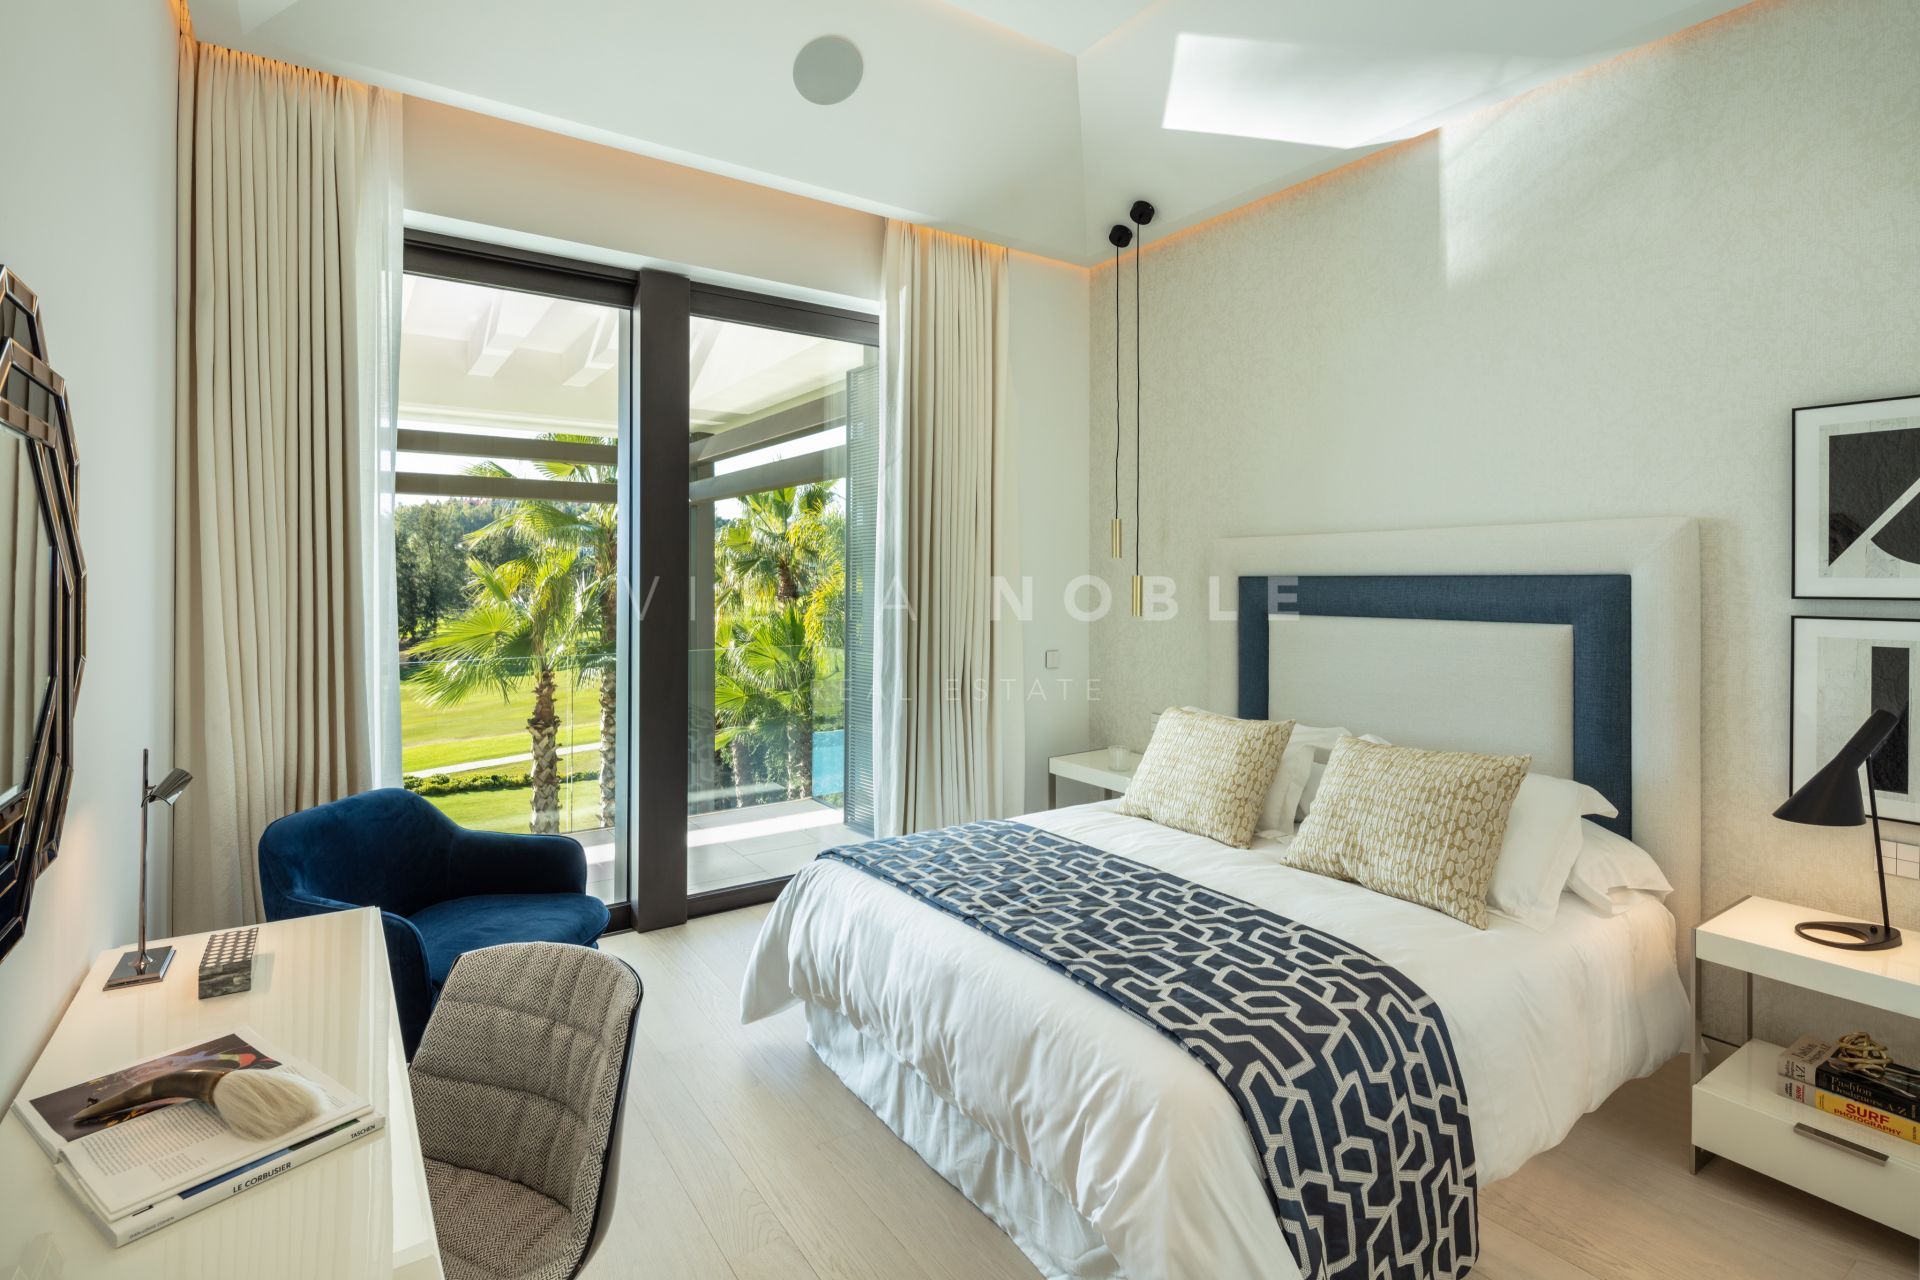 7 bedrooms villa in one of the most exclusive residential communities, La Cerquilla Marbella